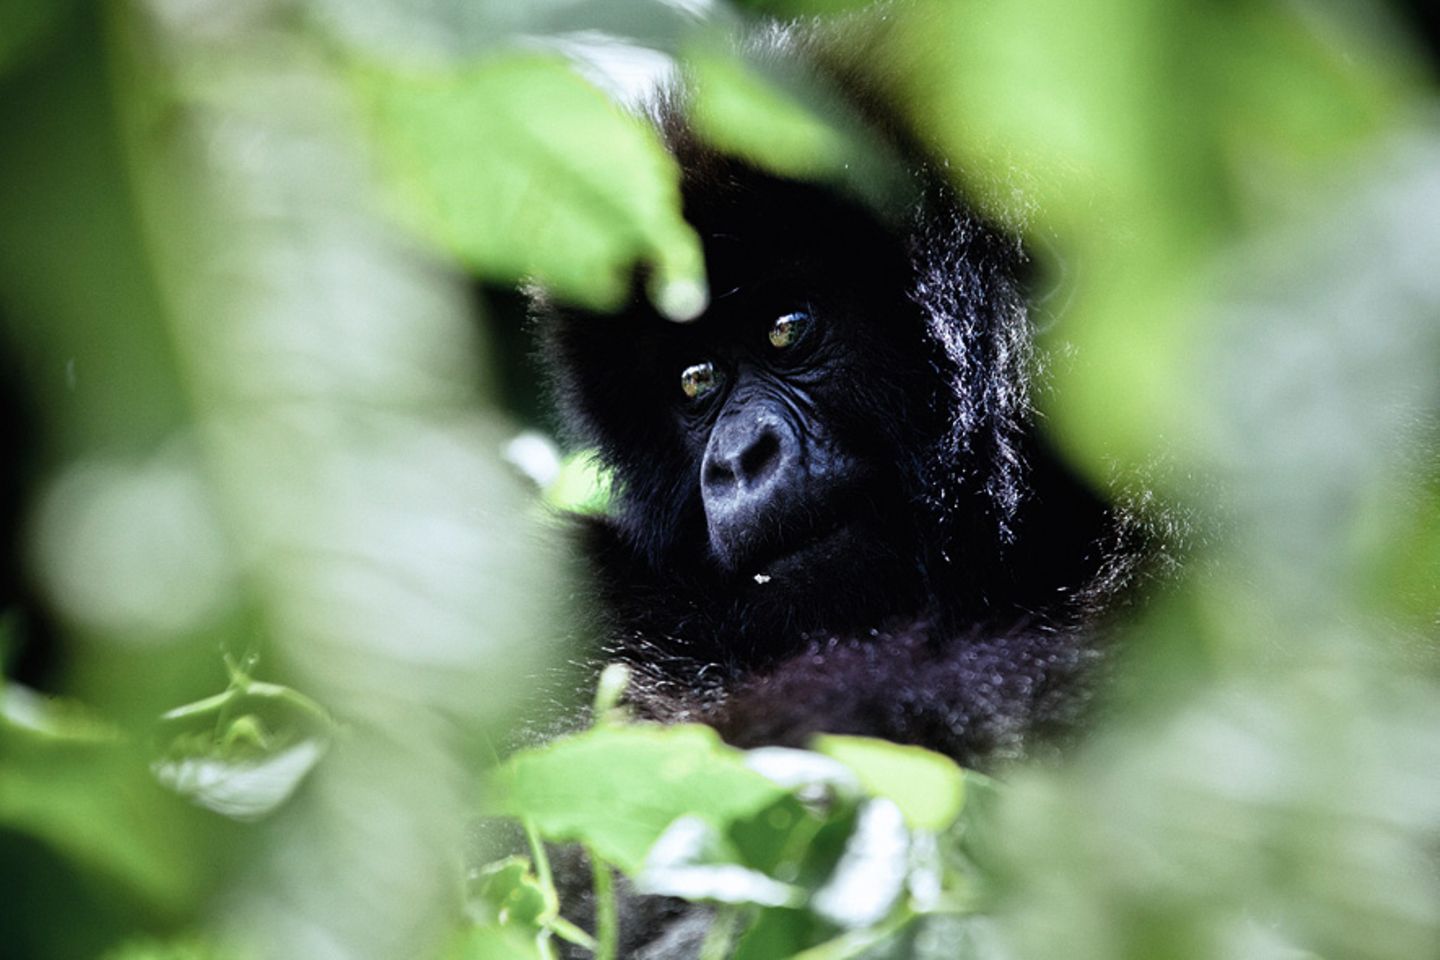 Berggorilla-Nachwuchs in Ruanda